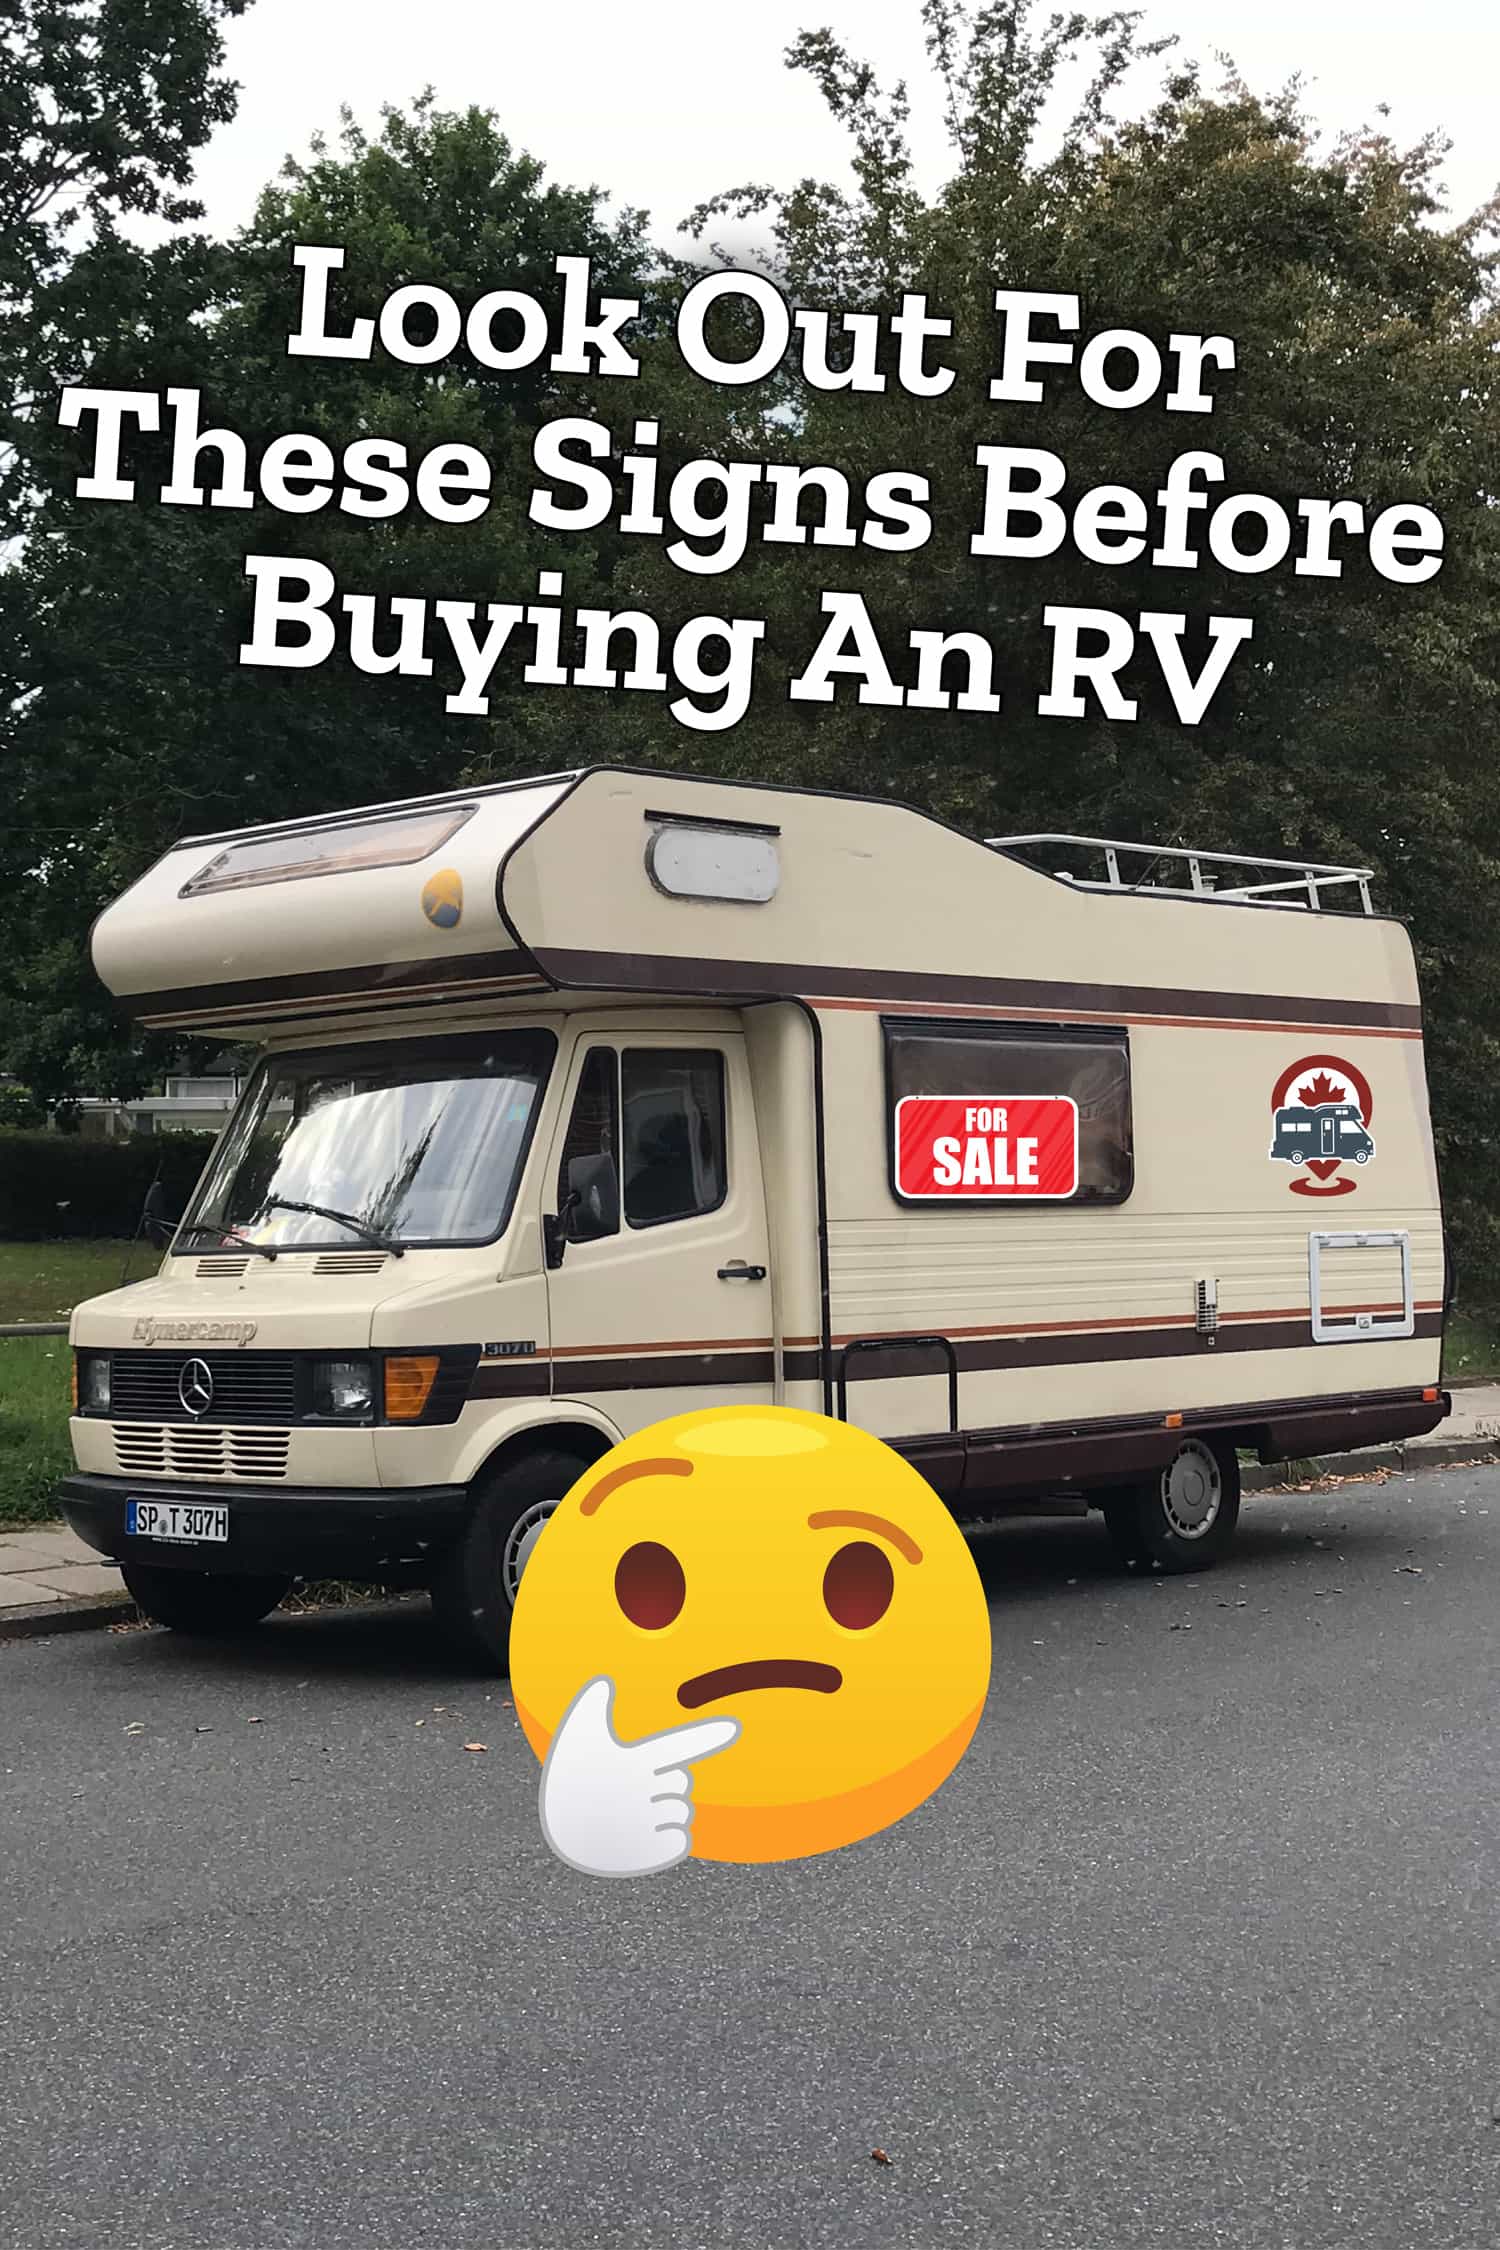 RV for Sale with wondering emoji